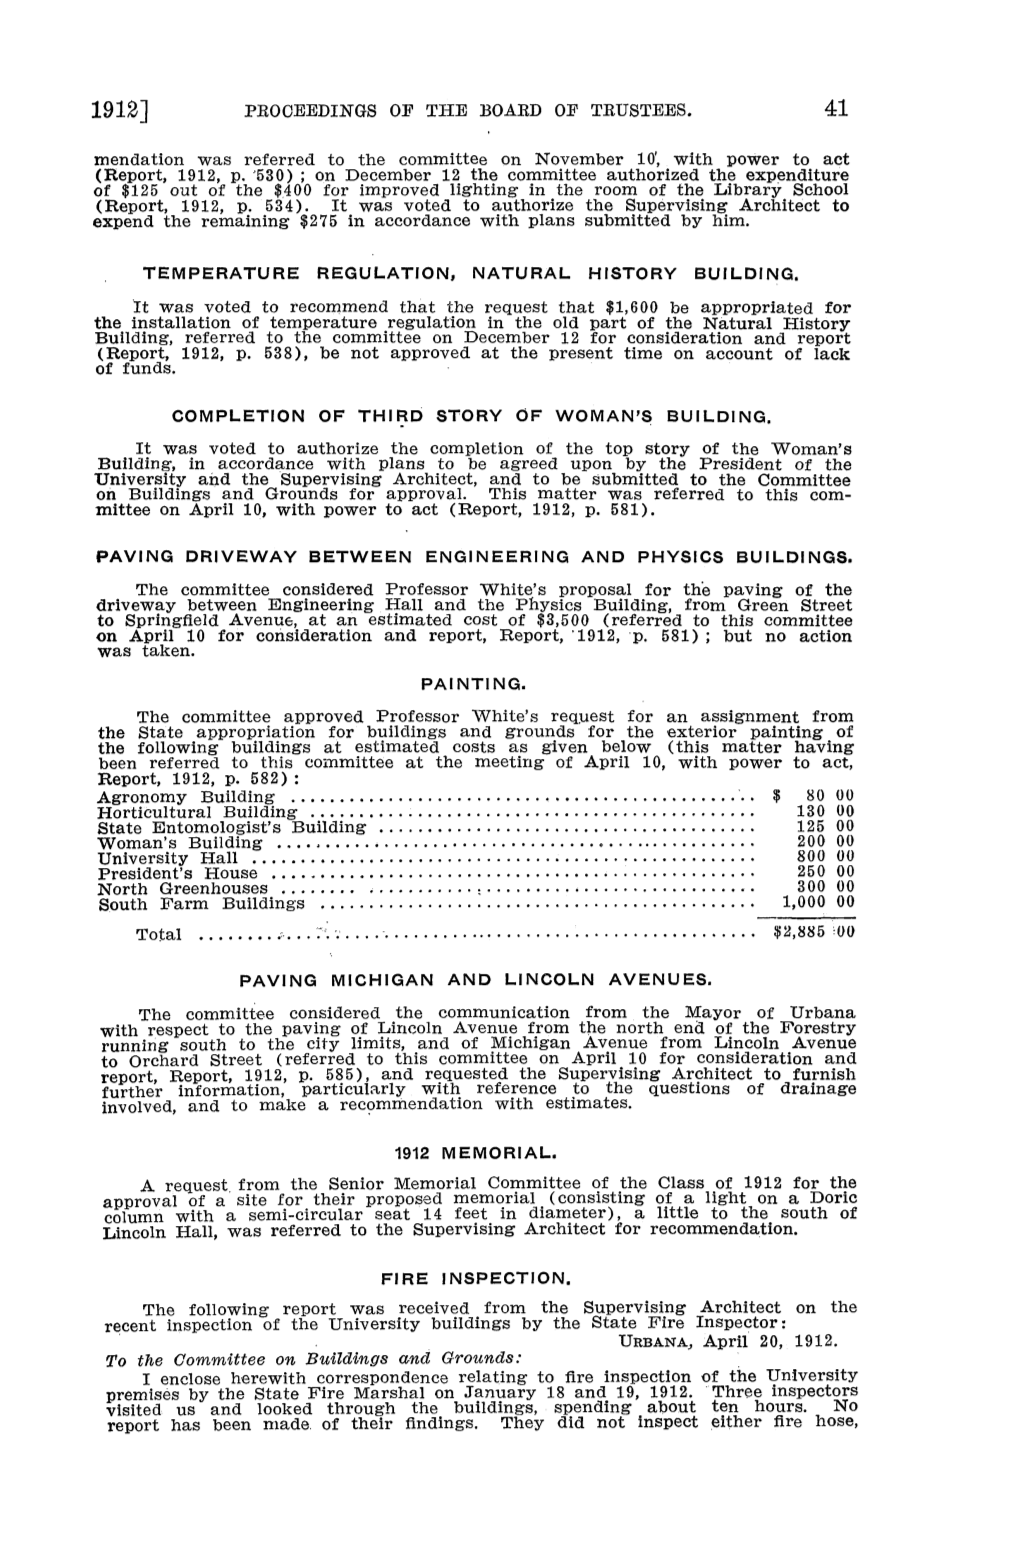 July 5, 1912, Minutes | UI Board of Trustees